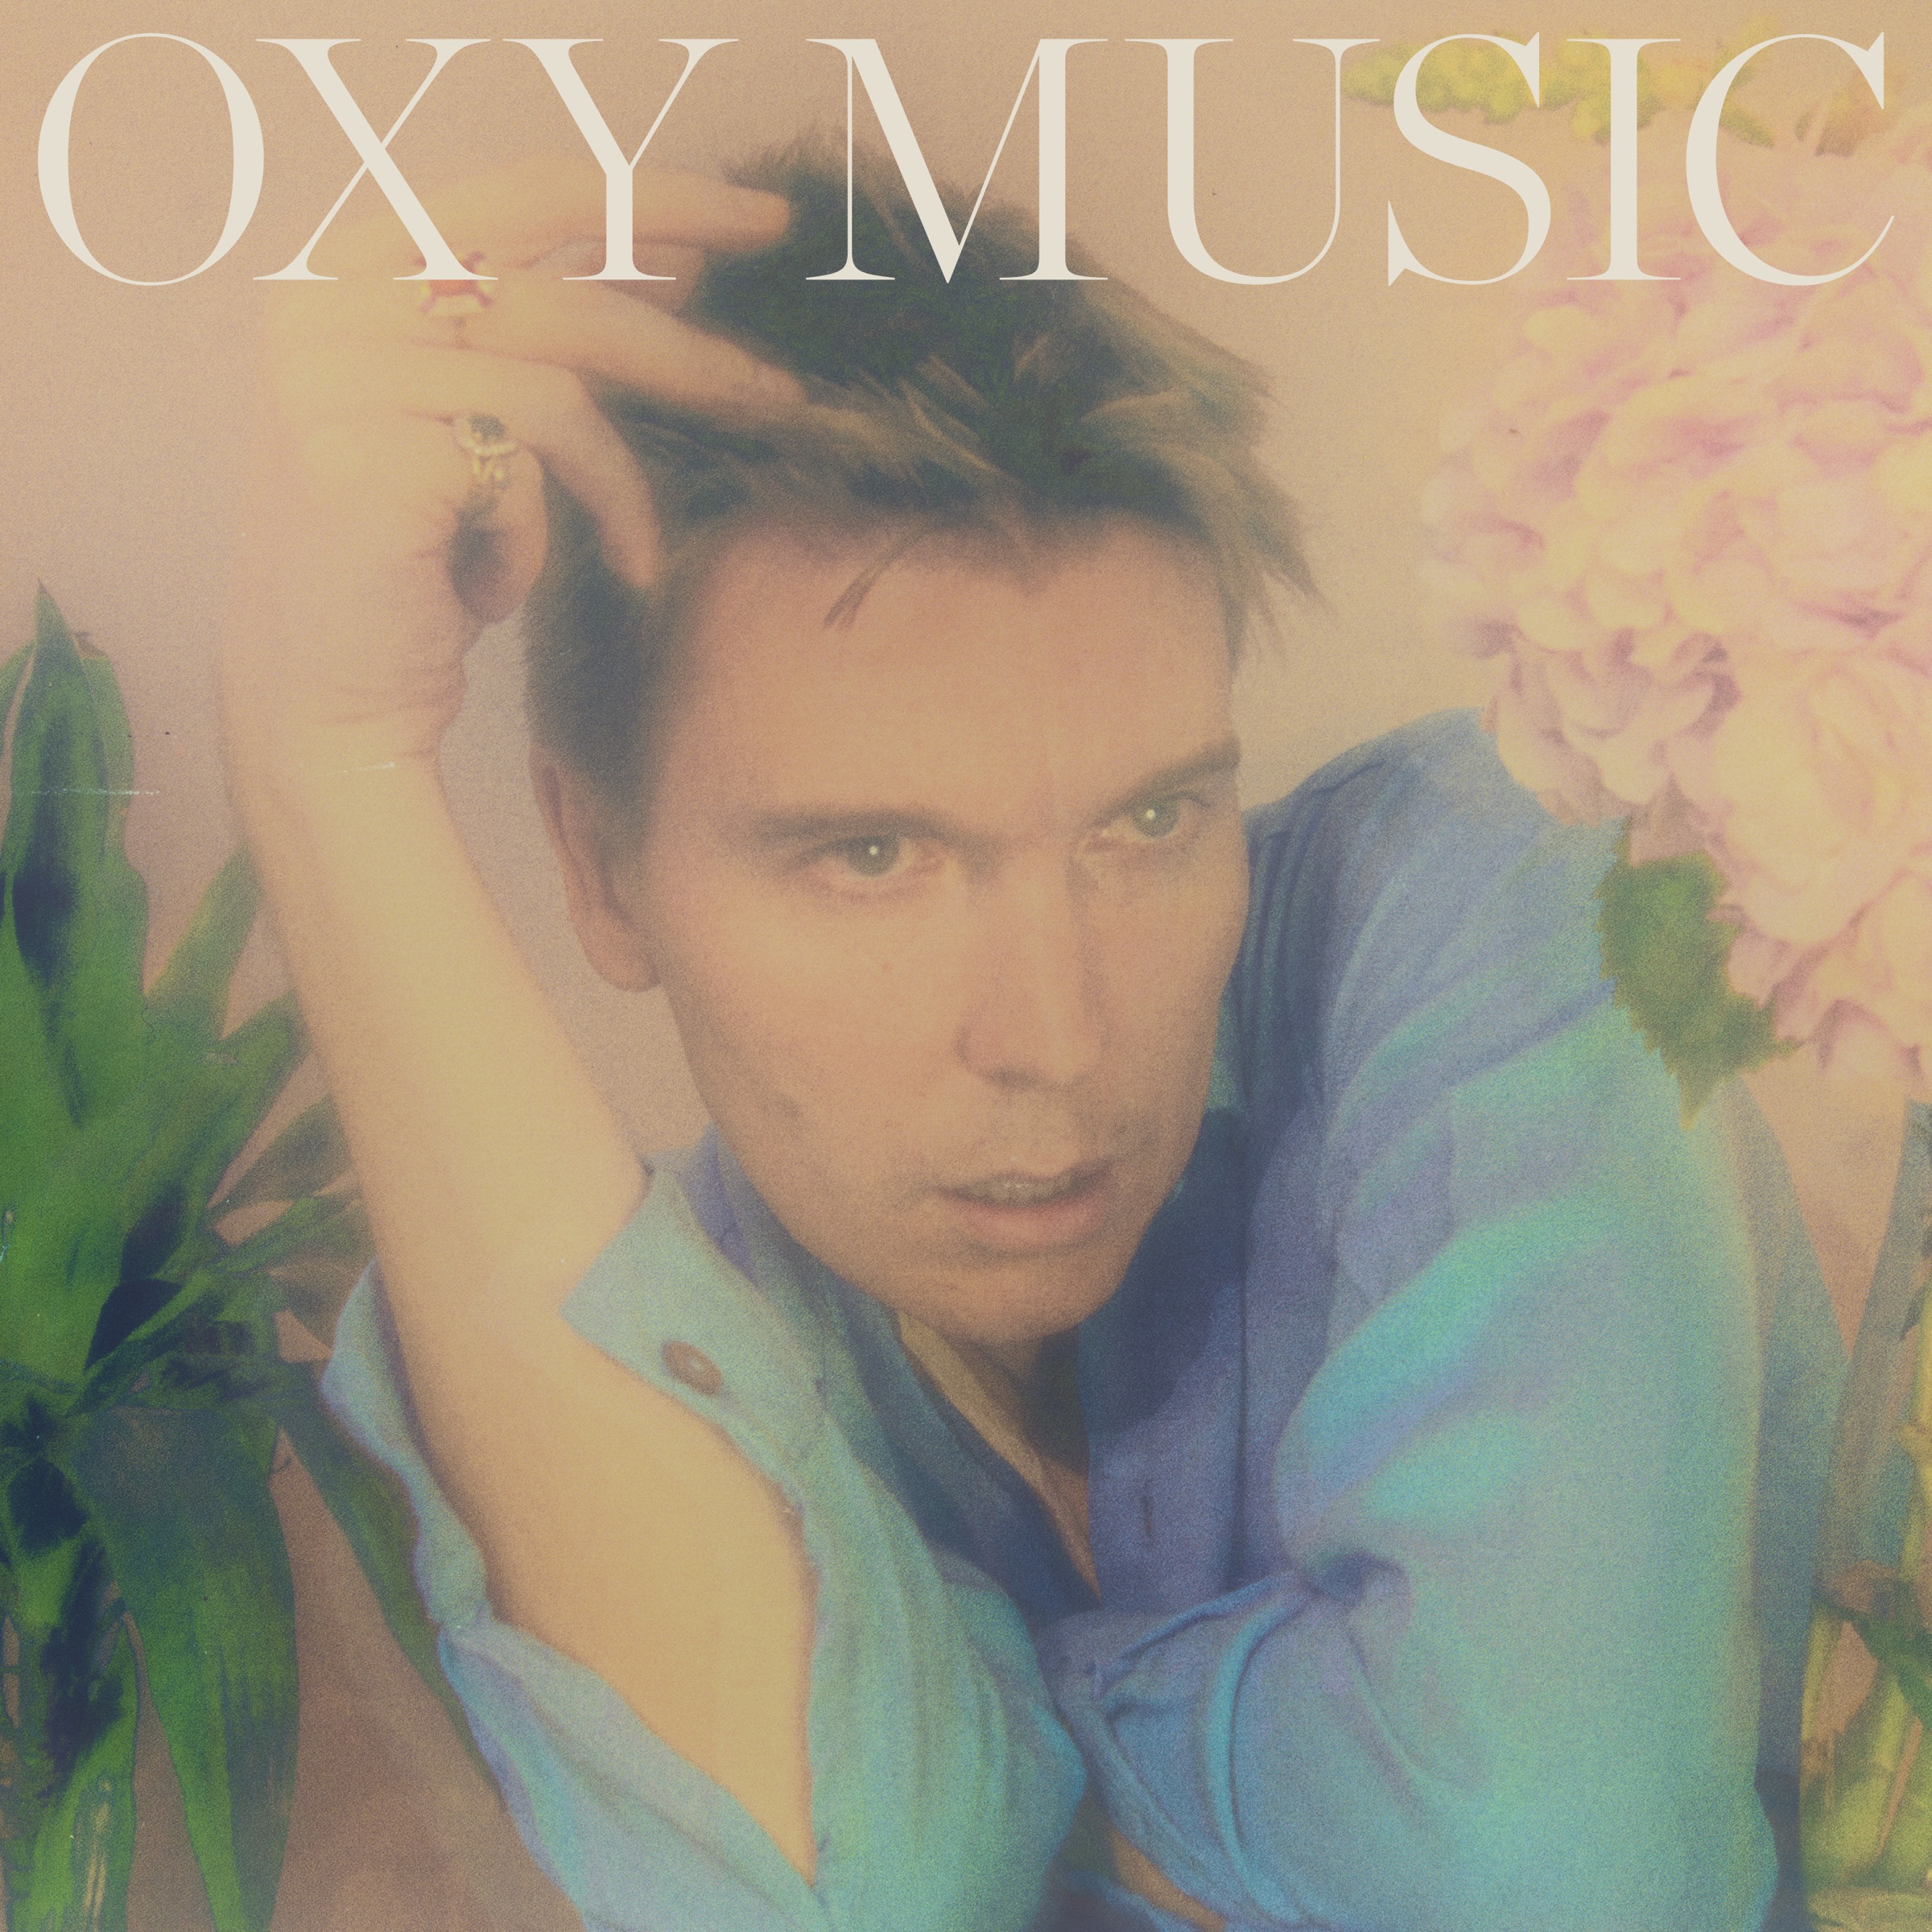 Alex Cameron Oxy Music cover artwork